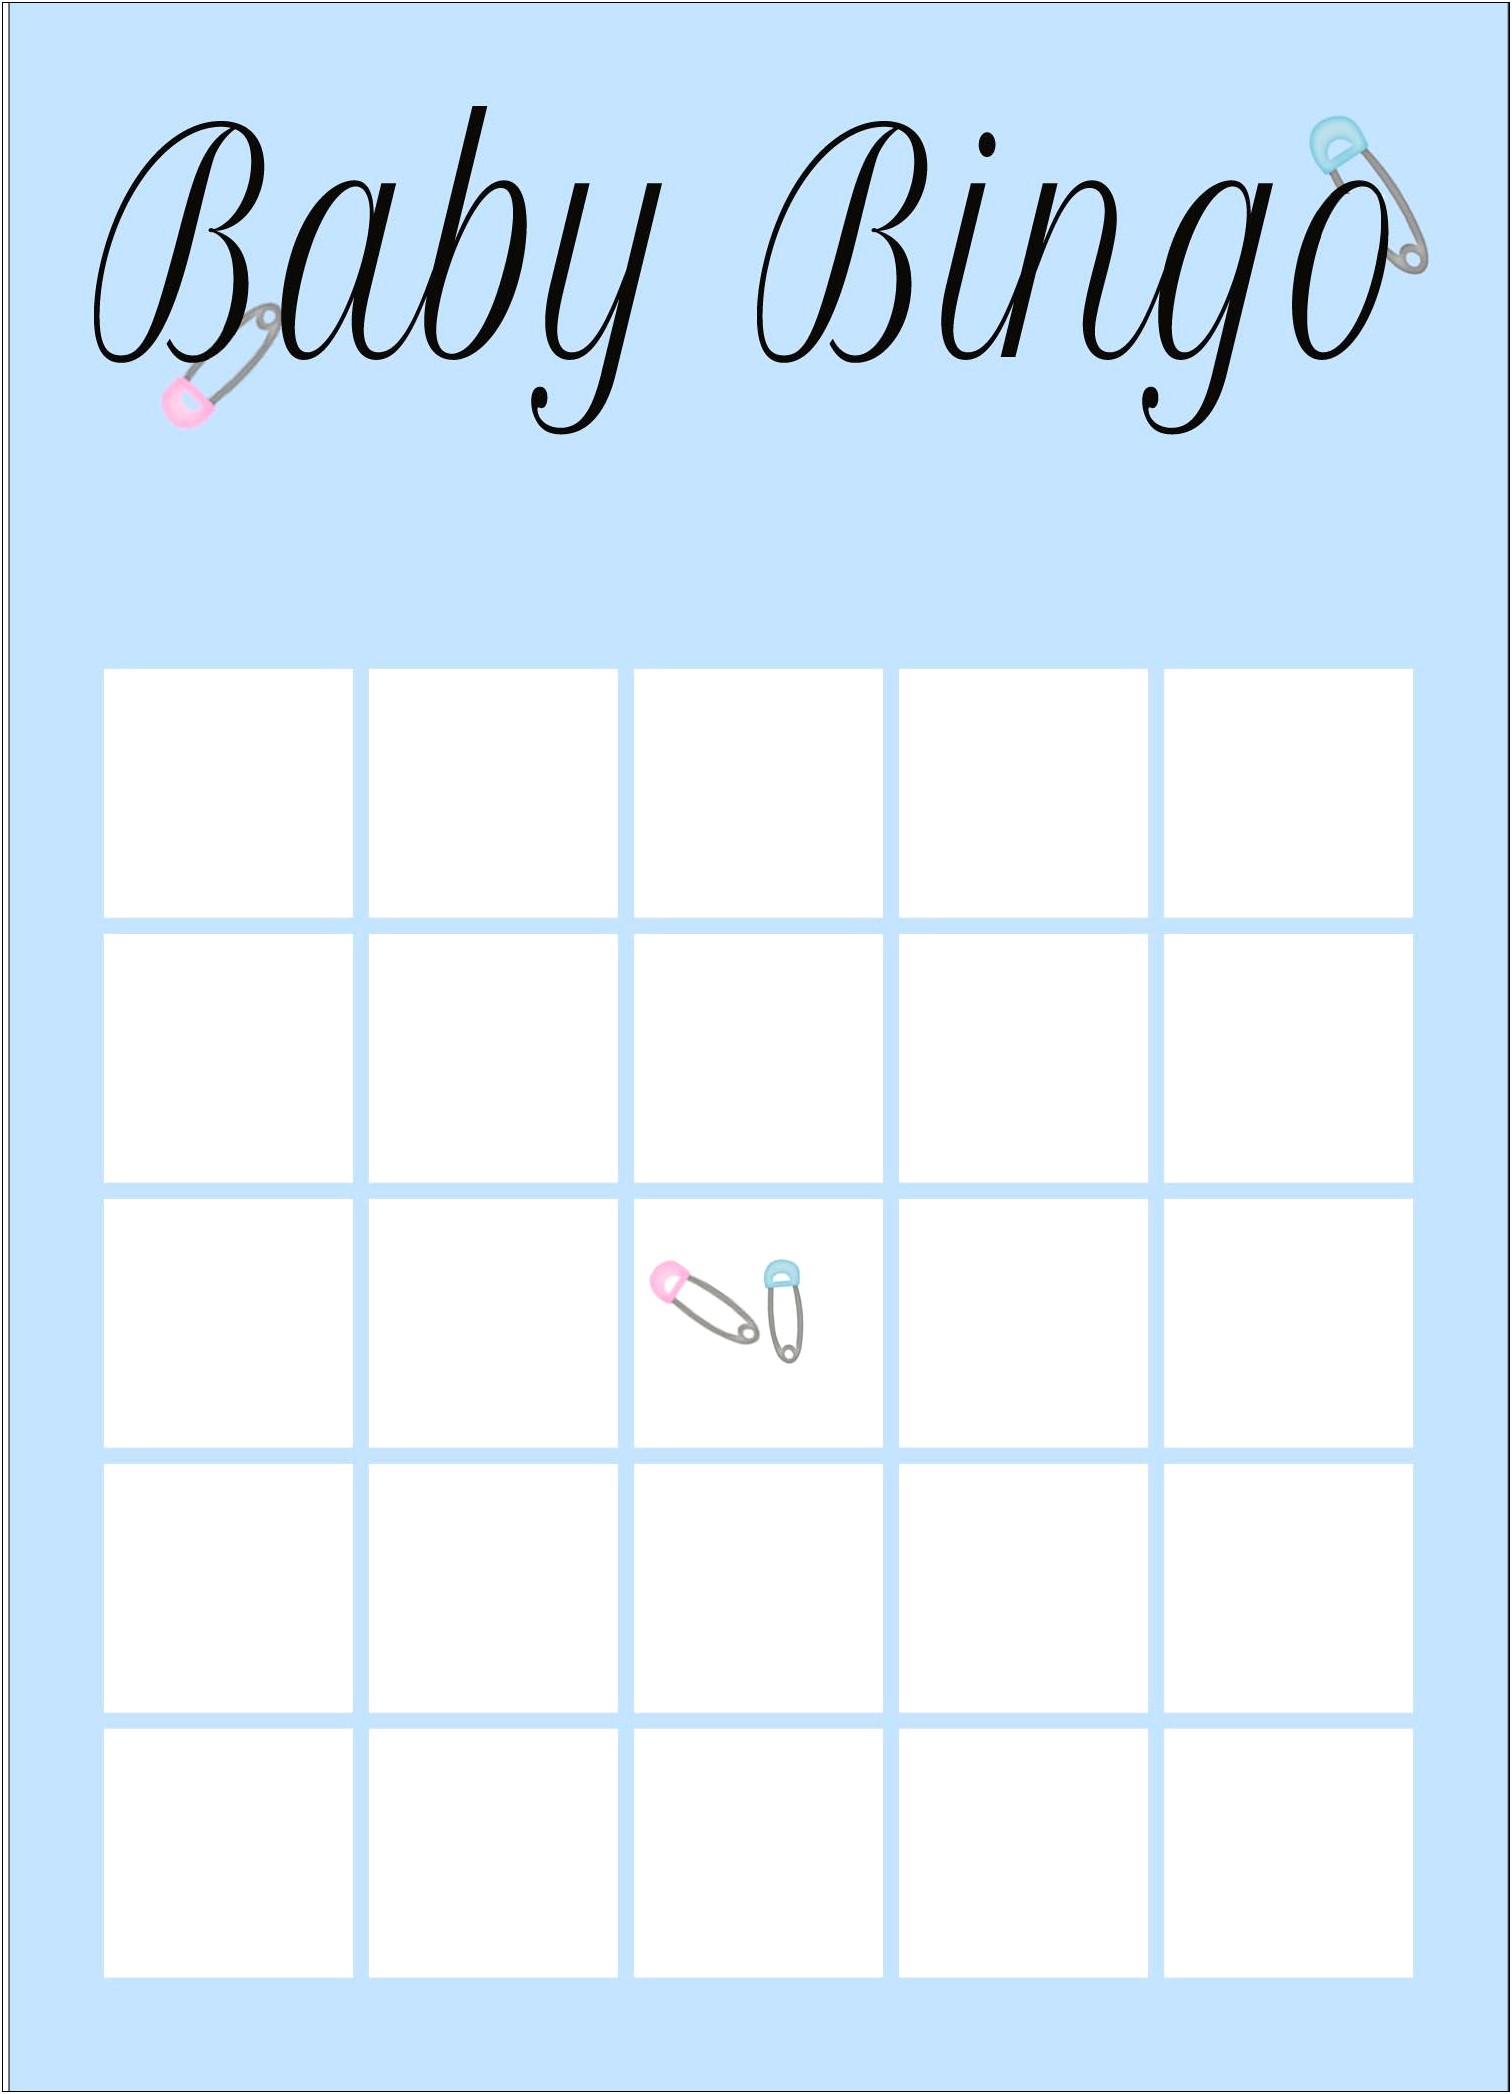 Baby Shower Bingo Game Template Free